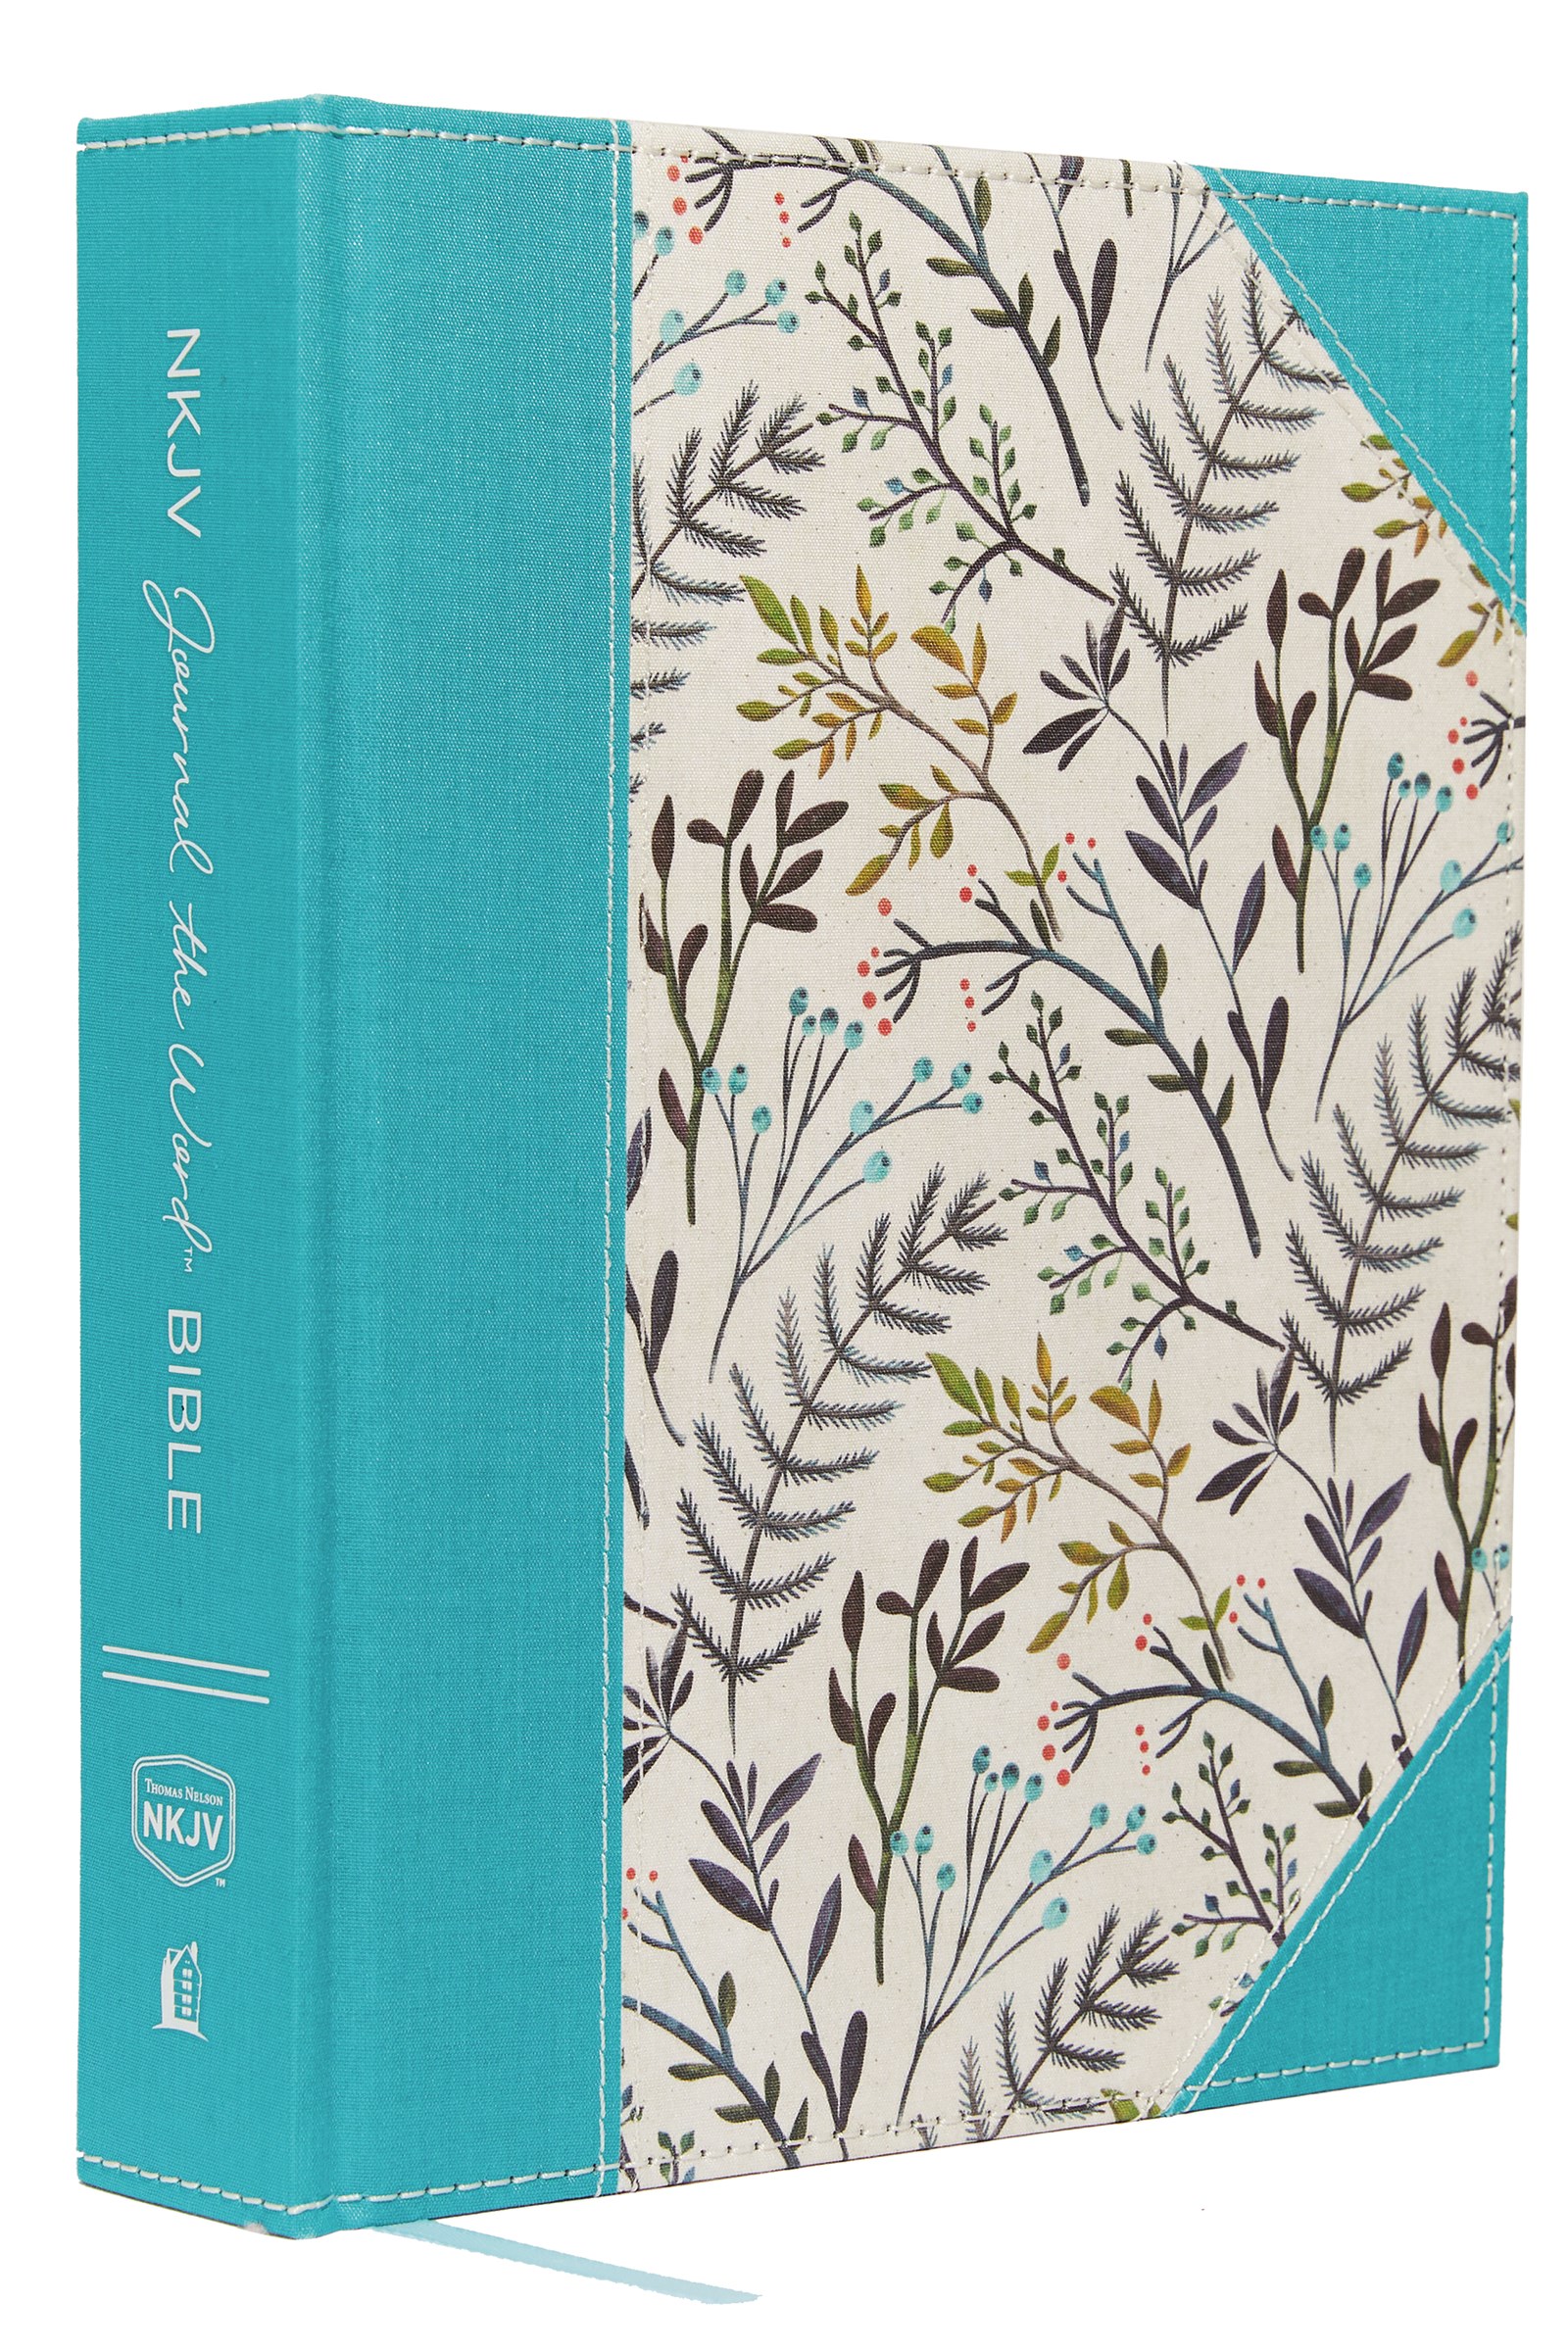 Nkjv Journal The Word Bible/Large Print-Teal Floral Hardcover ...